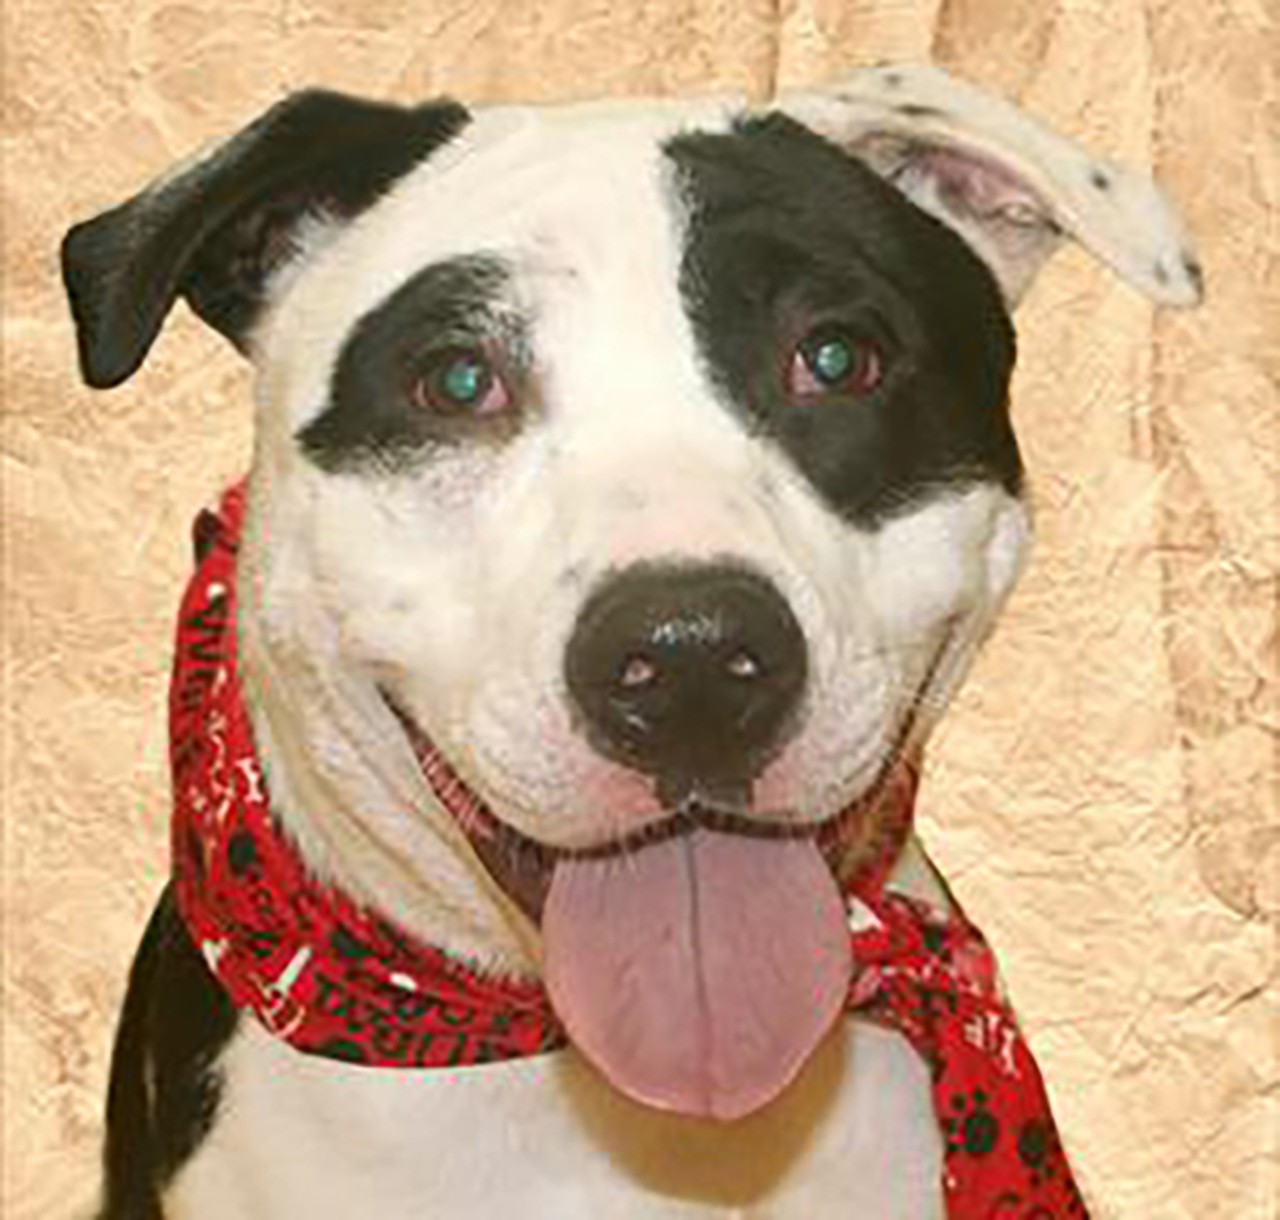 Carter
Age: 4 years old | Breed: Terrier, American Pit Bull/Mix | Sex: Male | Rescue: SPCA 
Photo via spcacincinnati.org